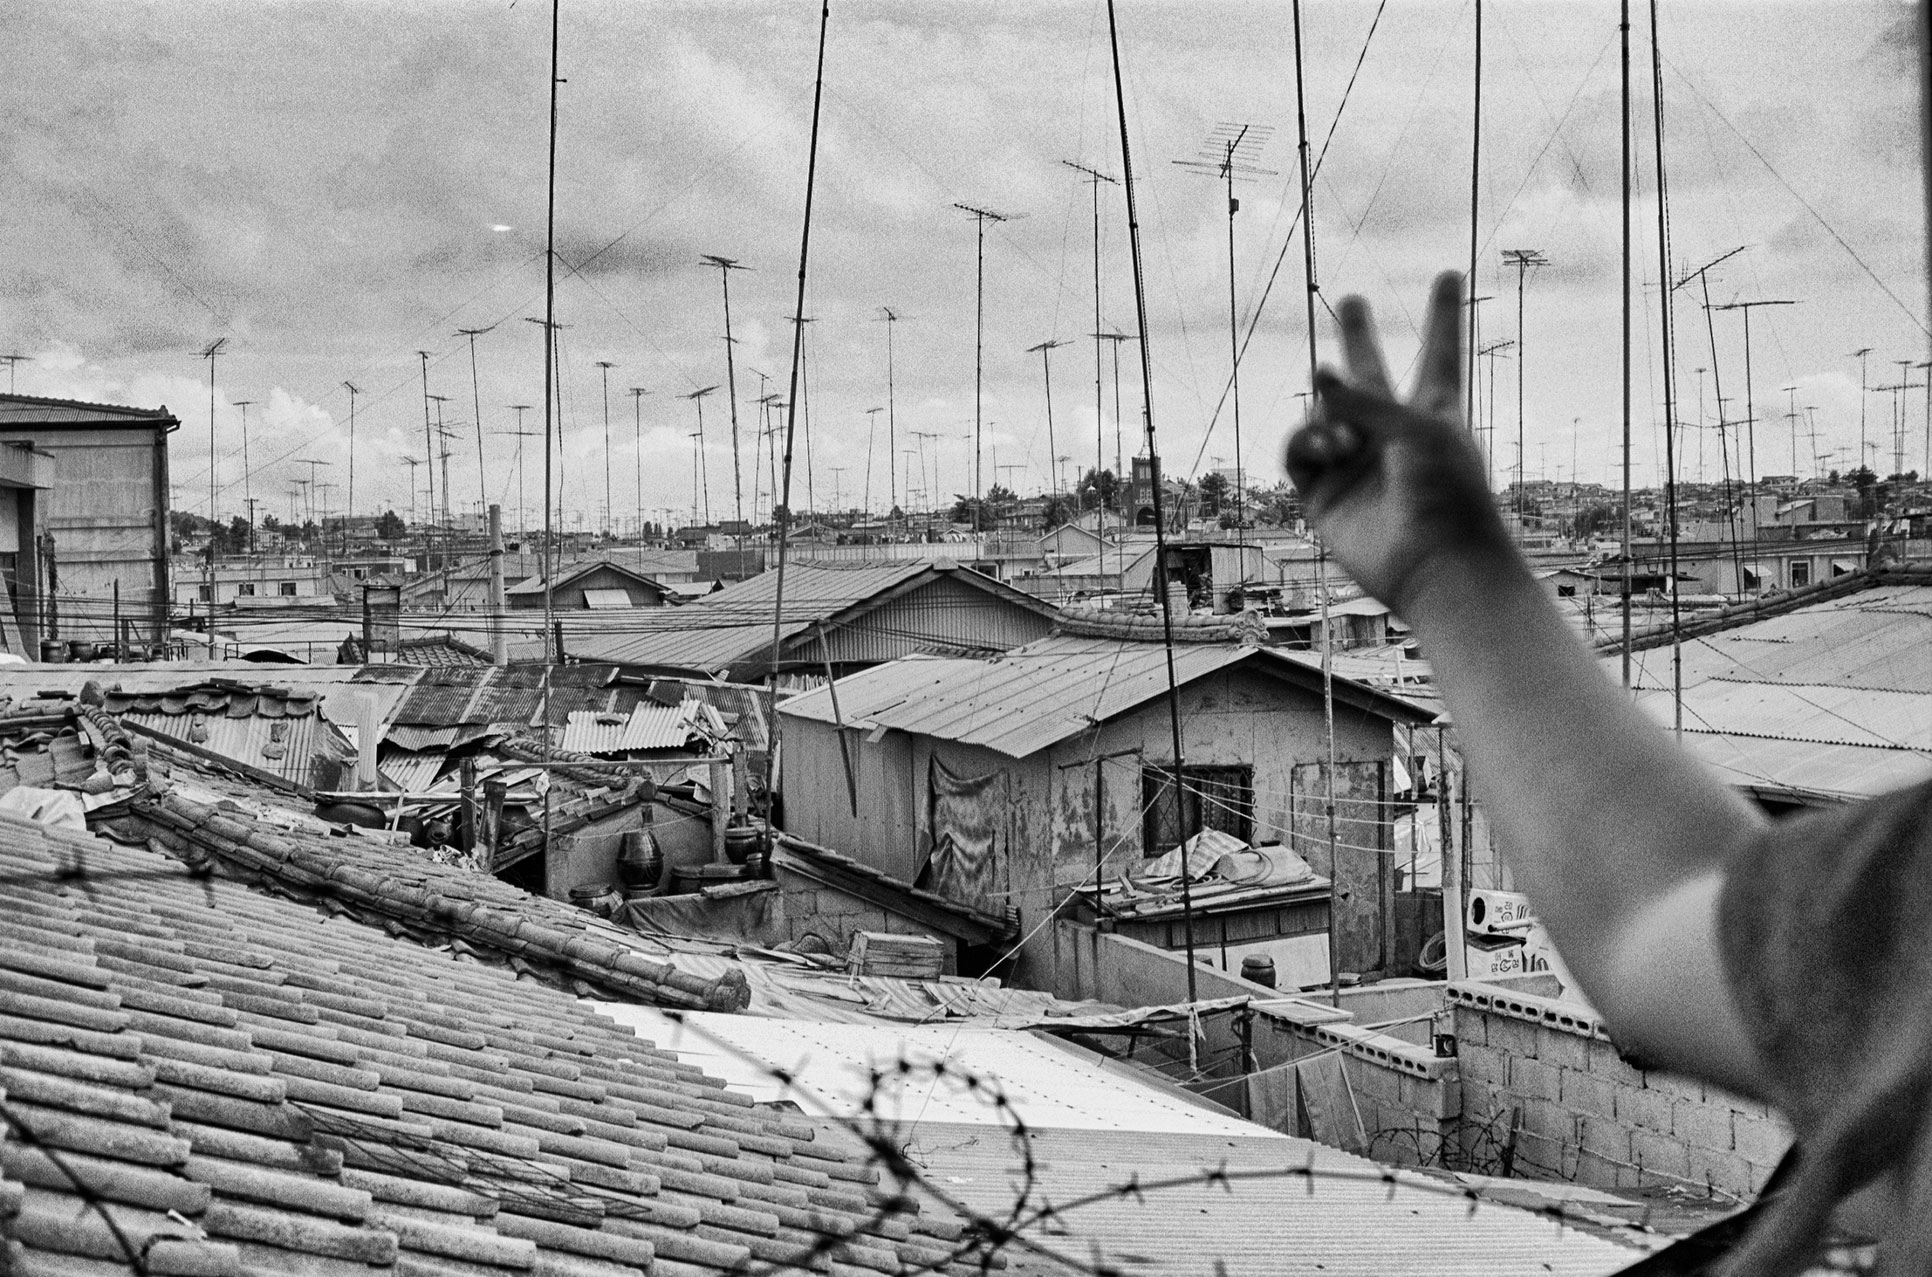 A rooftop view of Songtan, Korea in 1976.